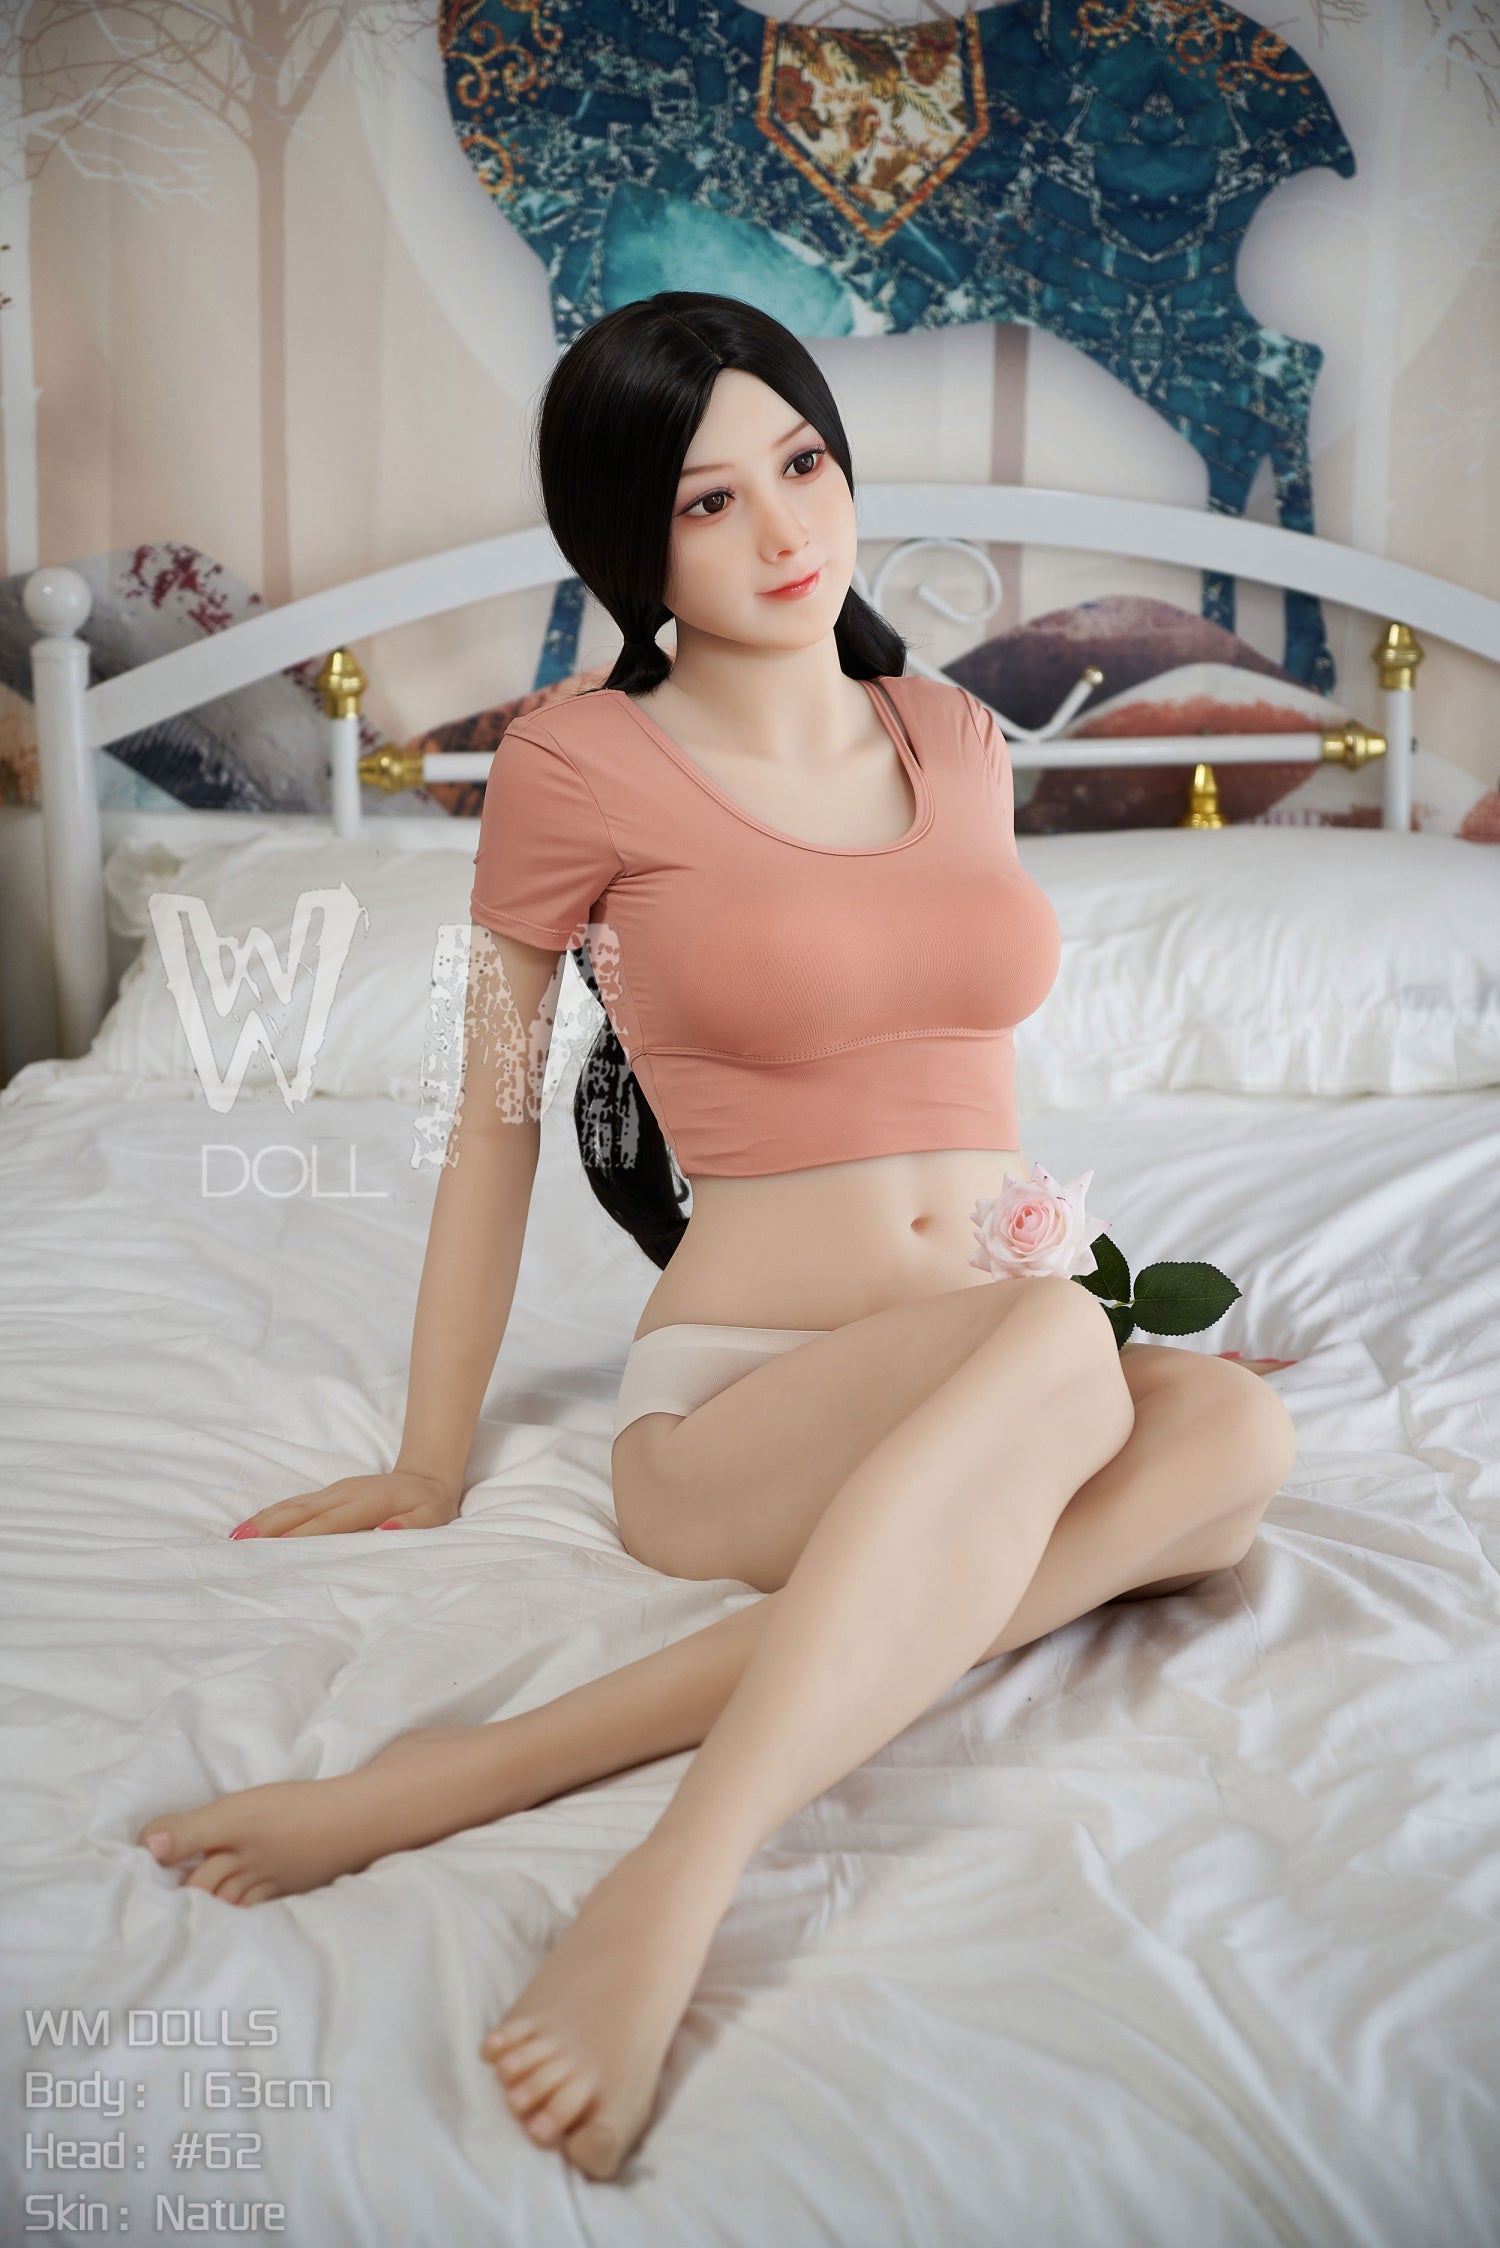 WM DOLL 163 CM C TPE (SG) | Buy Sex Dolls at DOLLS ACTUALLY